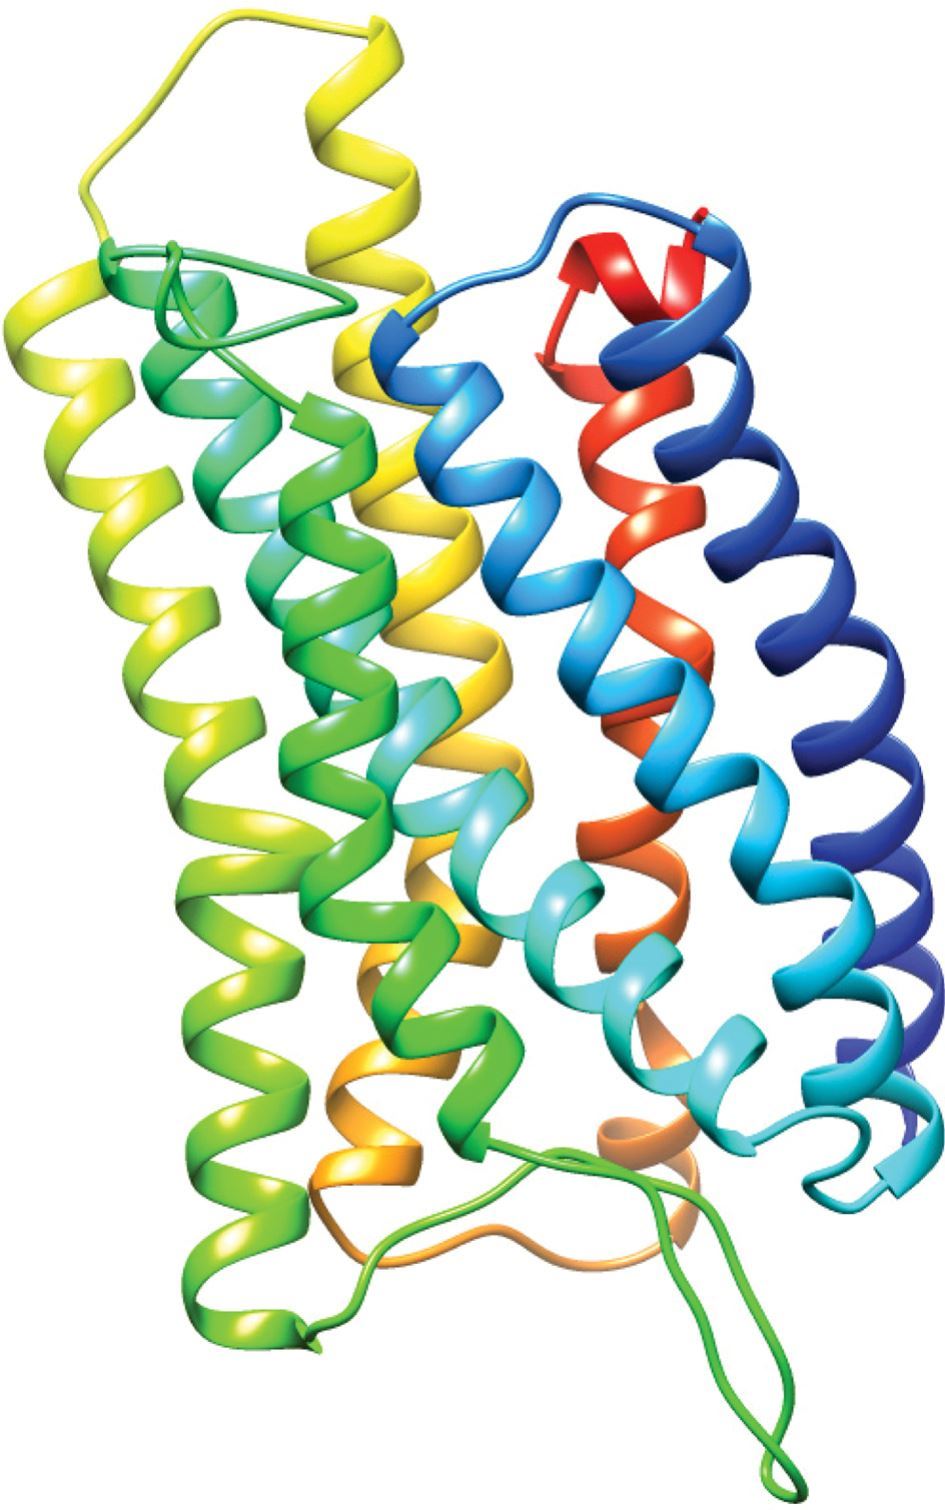 Homology model of GPR18 receptor structure